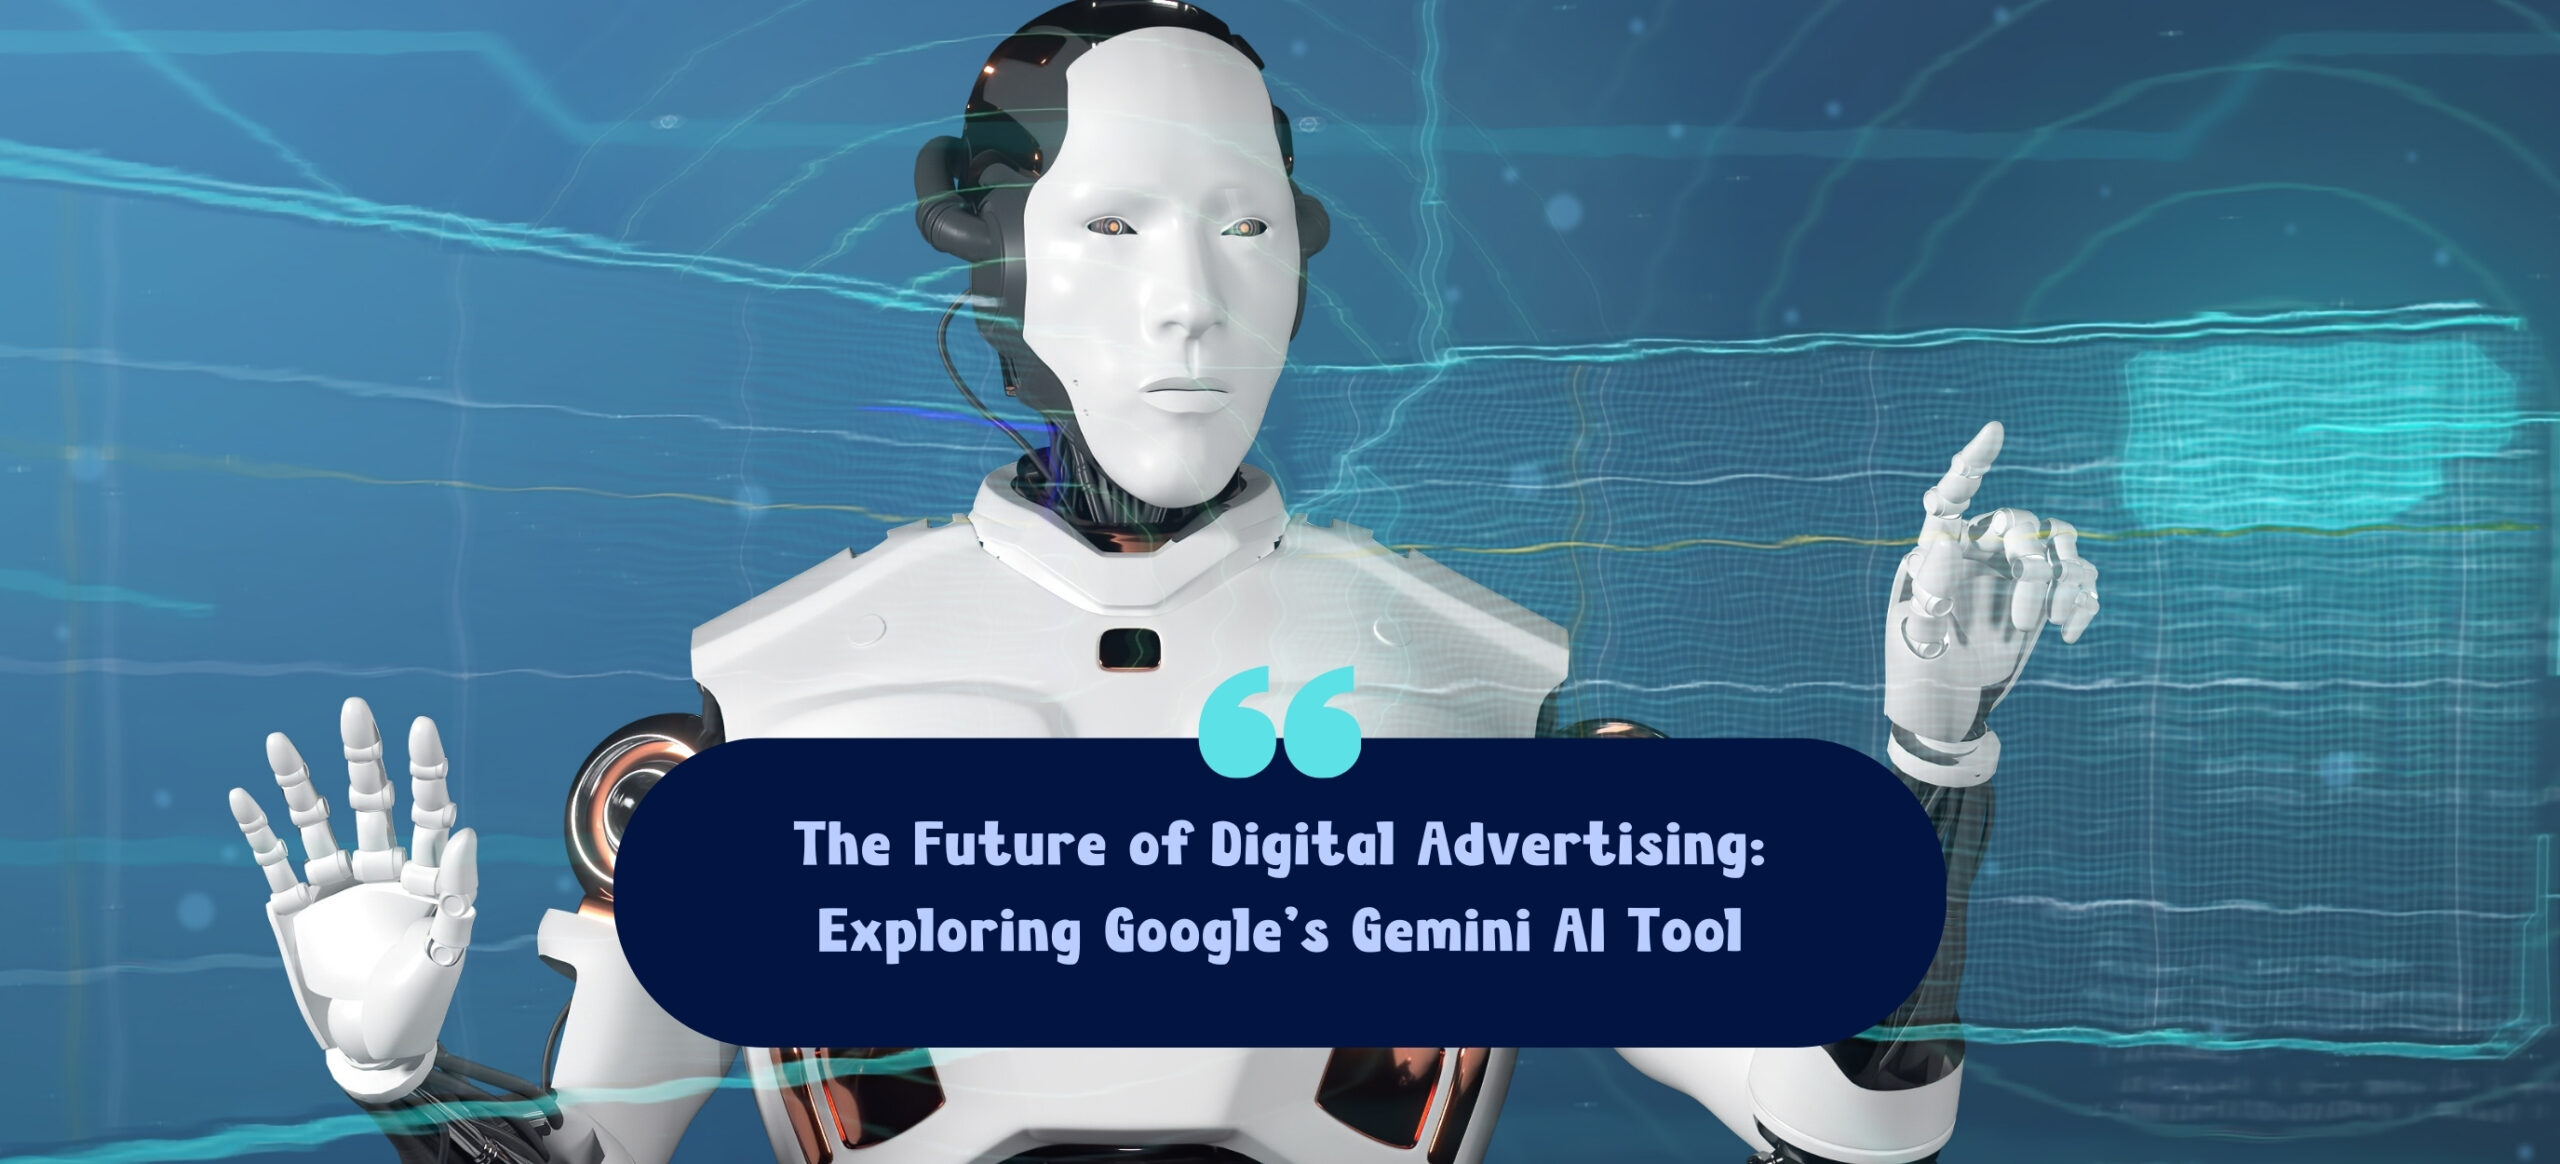 The Future of Digital Advertising: Exploring Google’s Gemini AI Tool